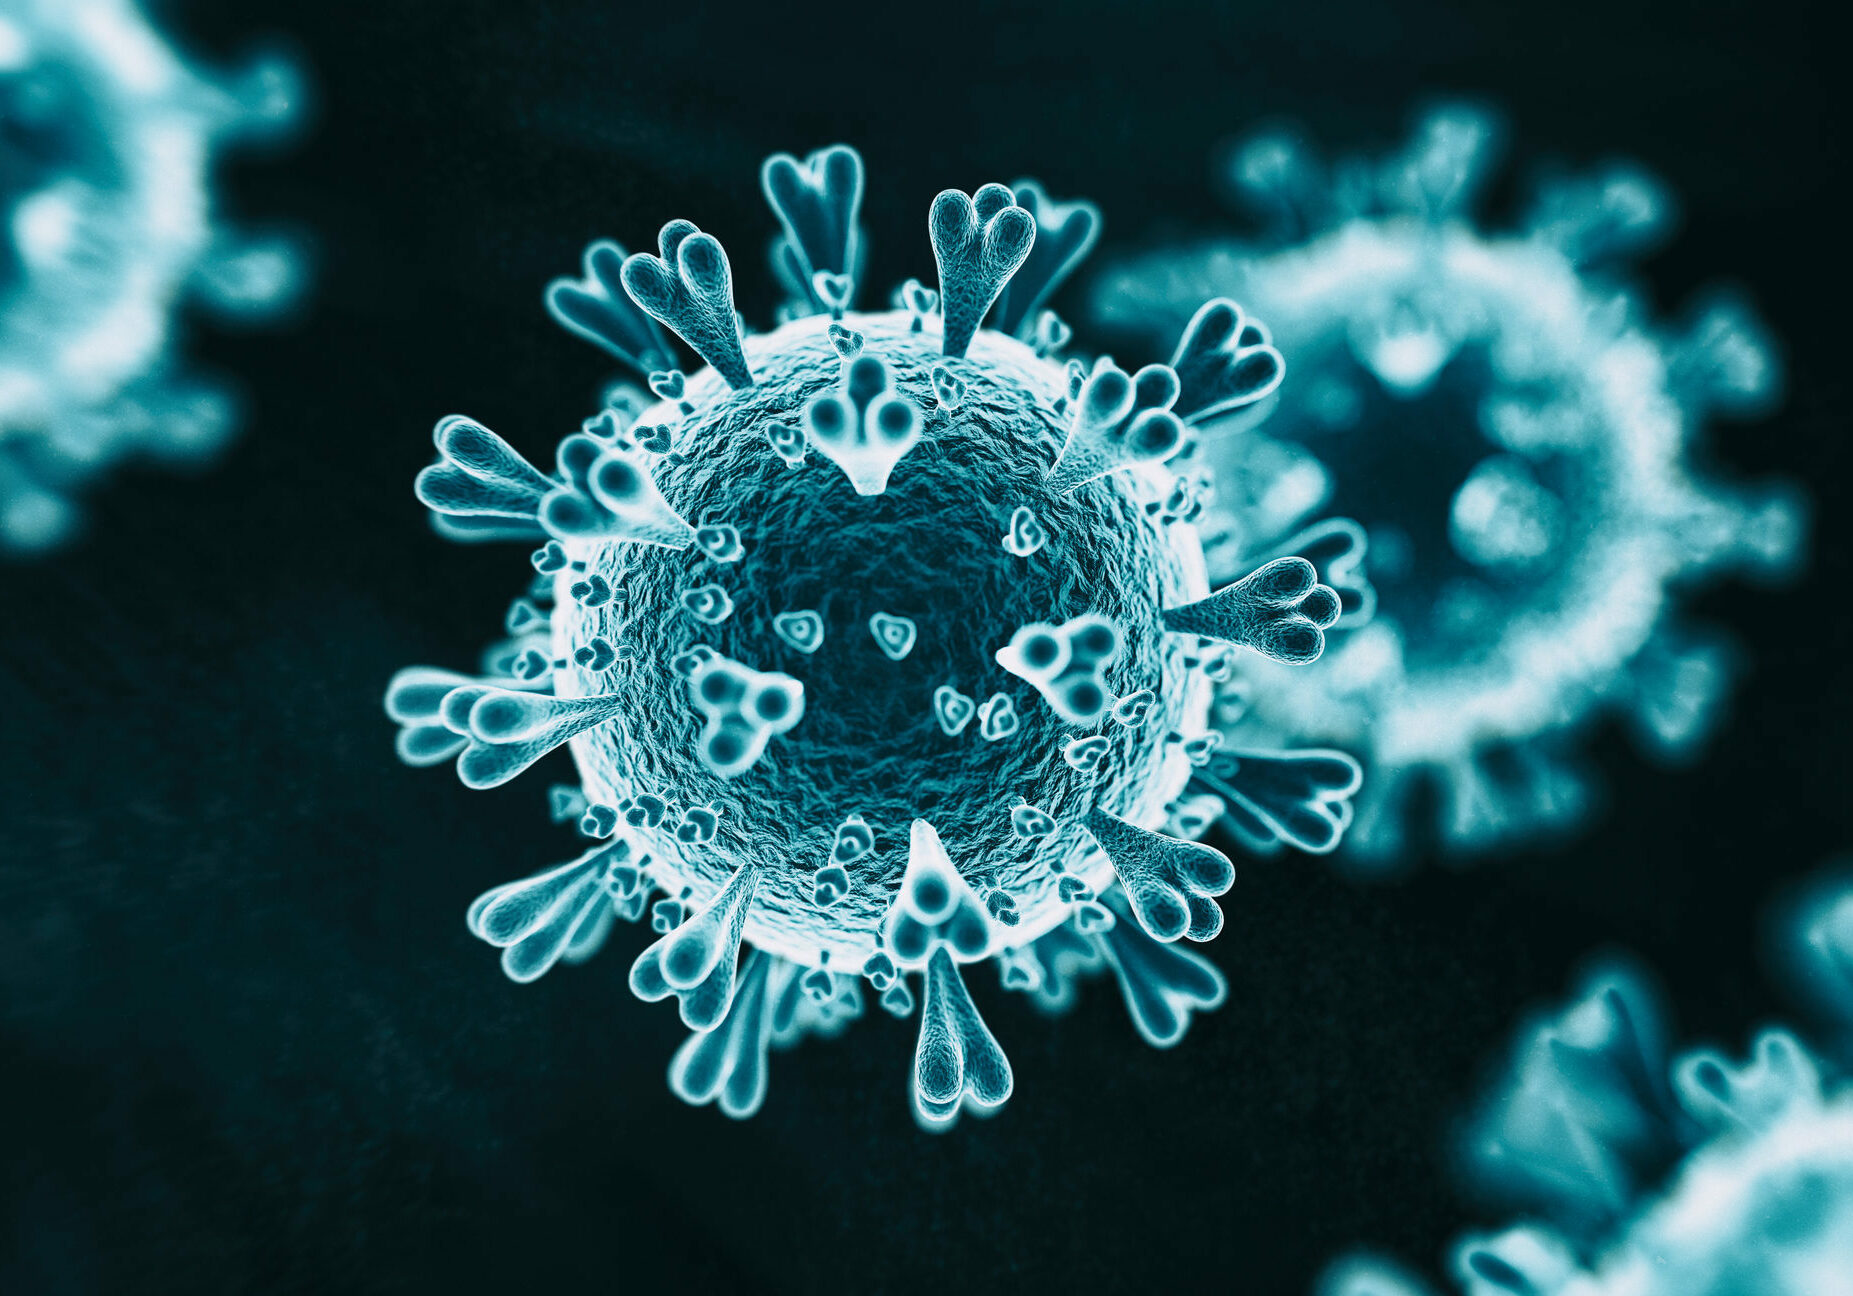 Abs 2019-nCoV RNA virus - 3d rendered image on black background.
Viral Infection concept. MERS-CoV, SARS-CoV, ТОРС, 2019-nCoV, Wuhan Coronavirus.
Hologram SEM view.